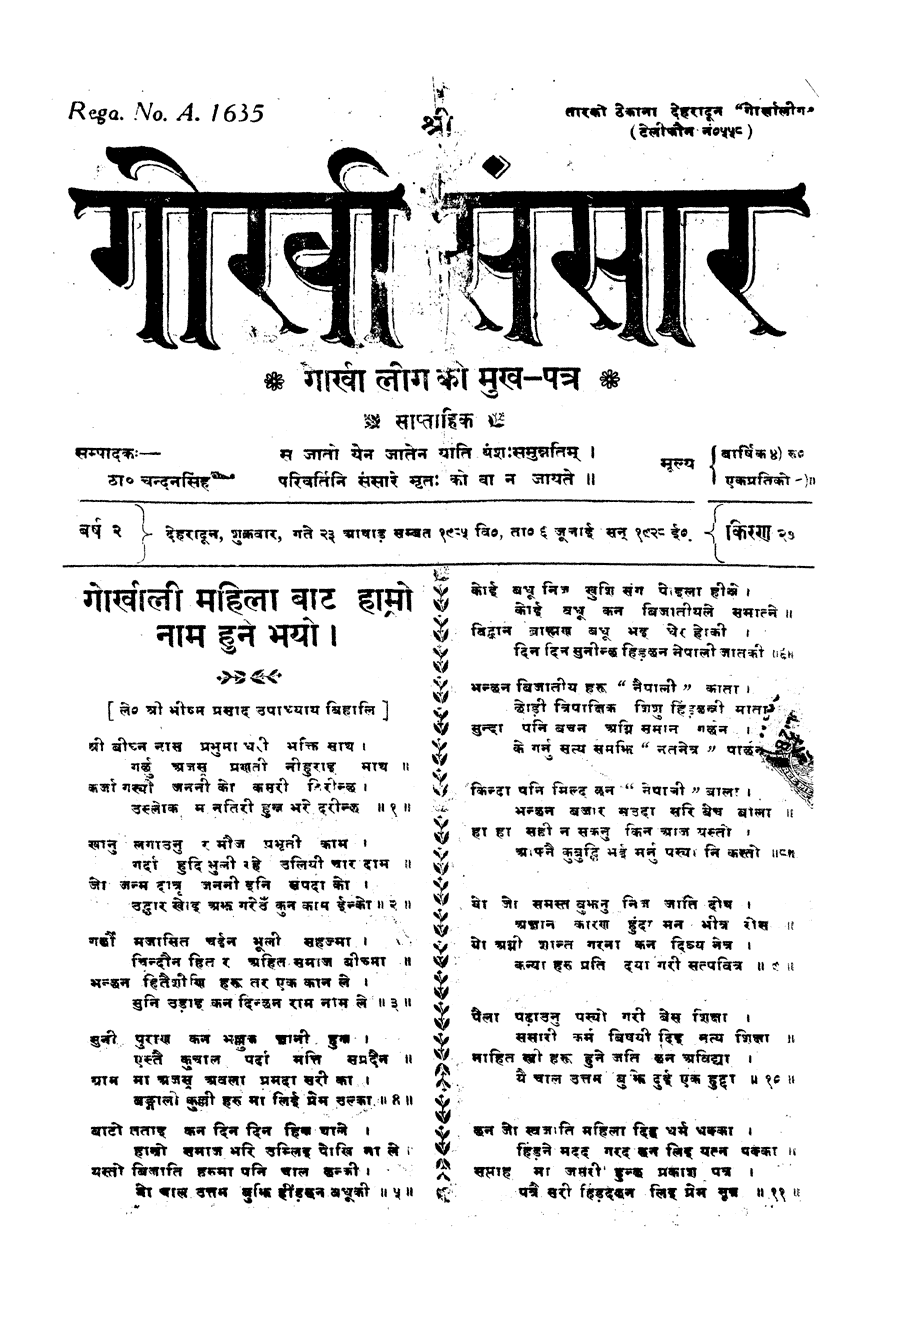 Gorkha Sansar, 6 July 1928, page 1